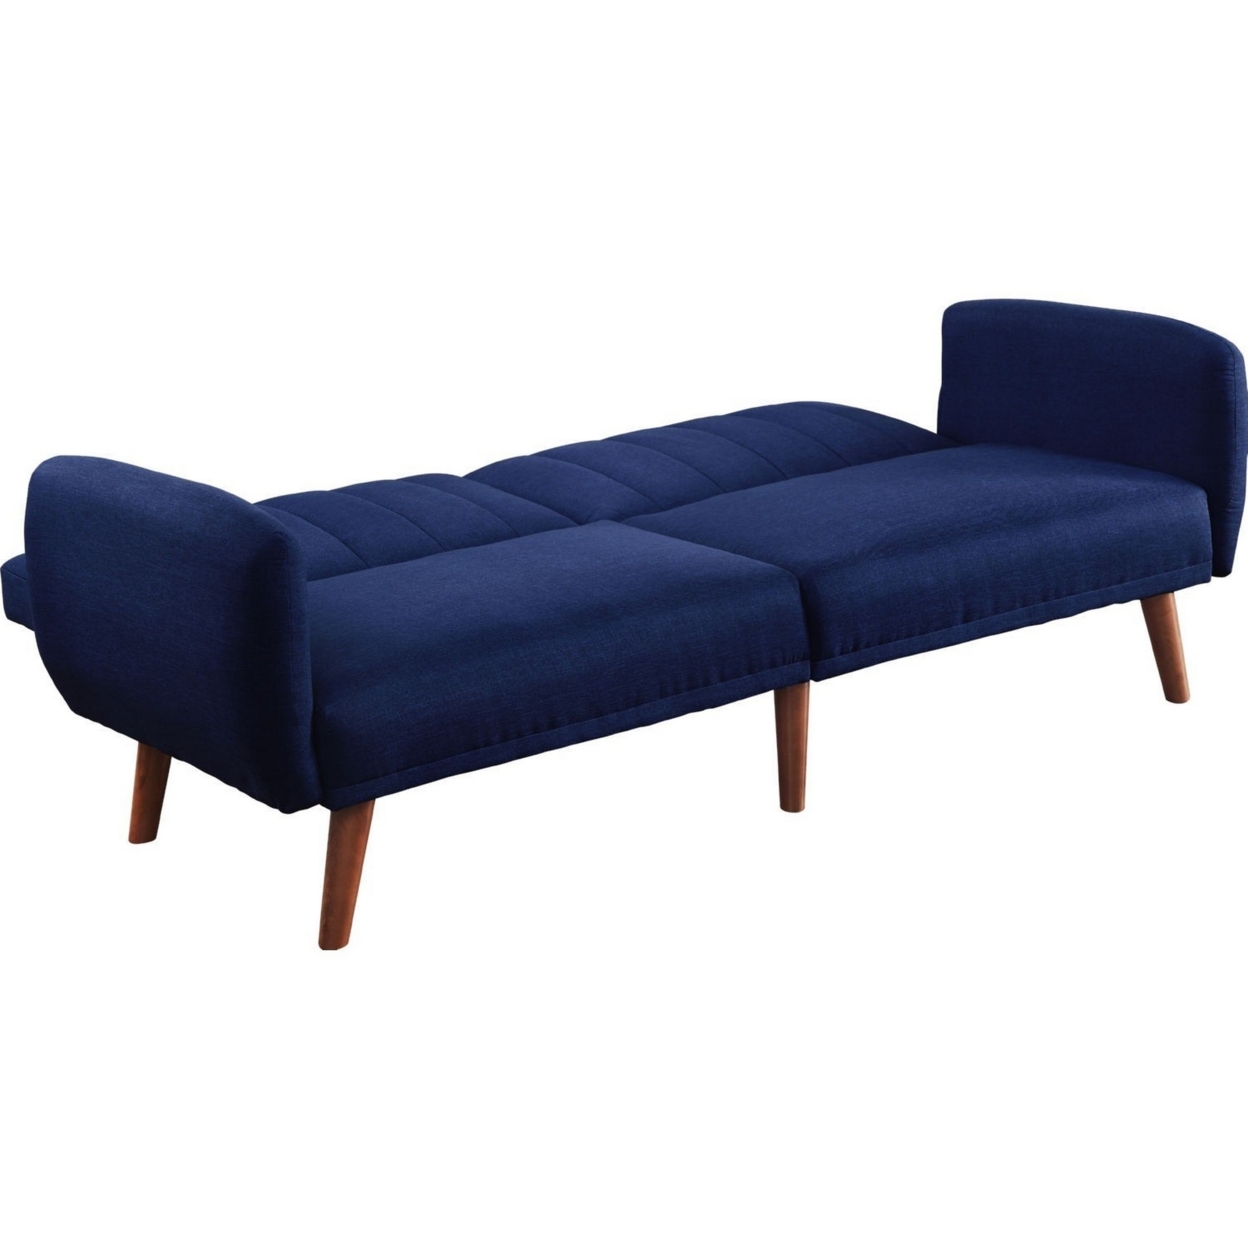 Fabric Upholstered Adjustable Sofa, Blue And Brown- Saltoro Sherpi